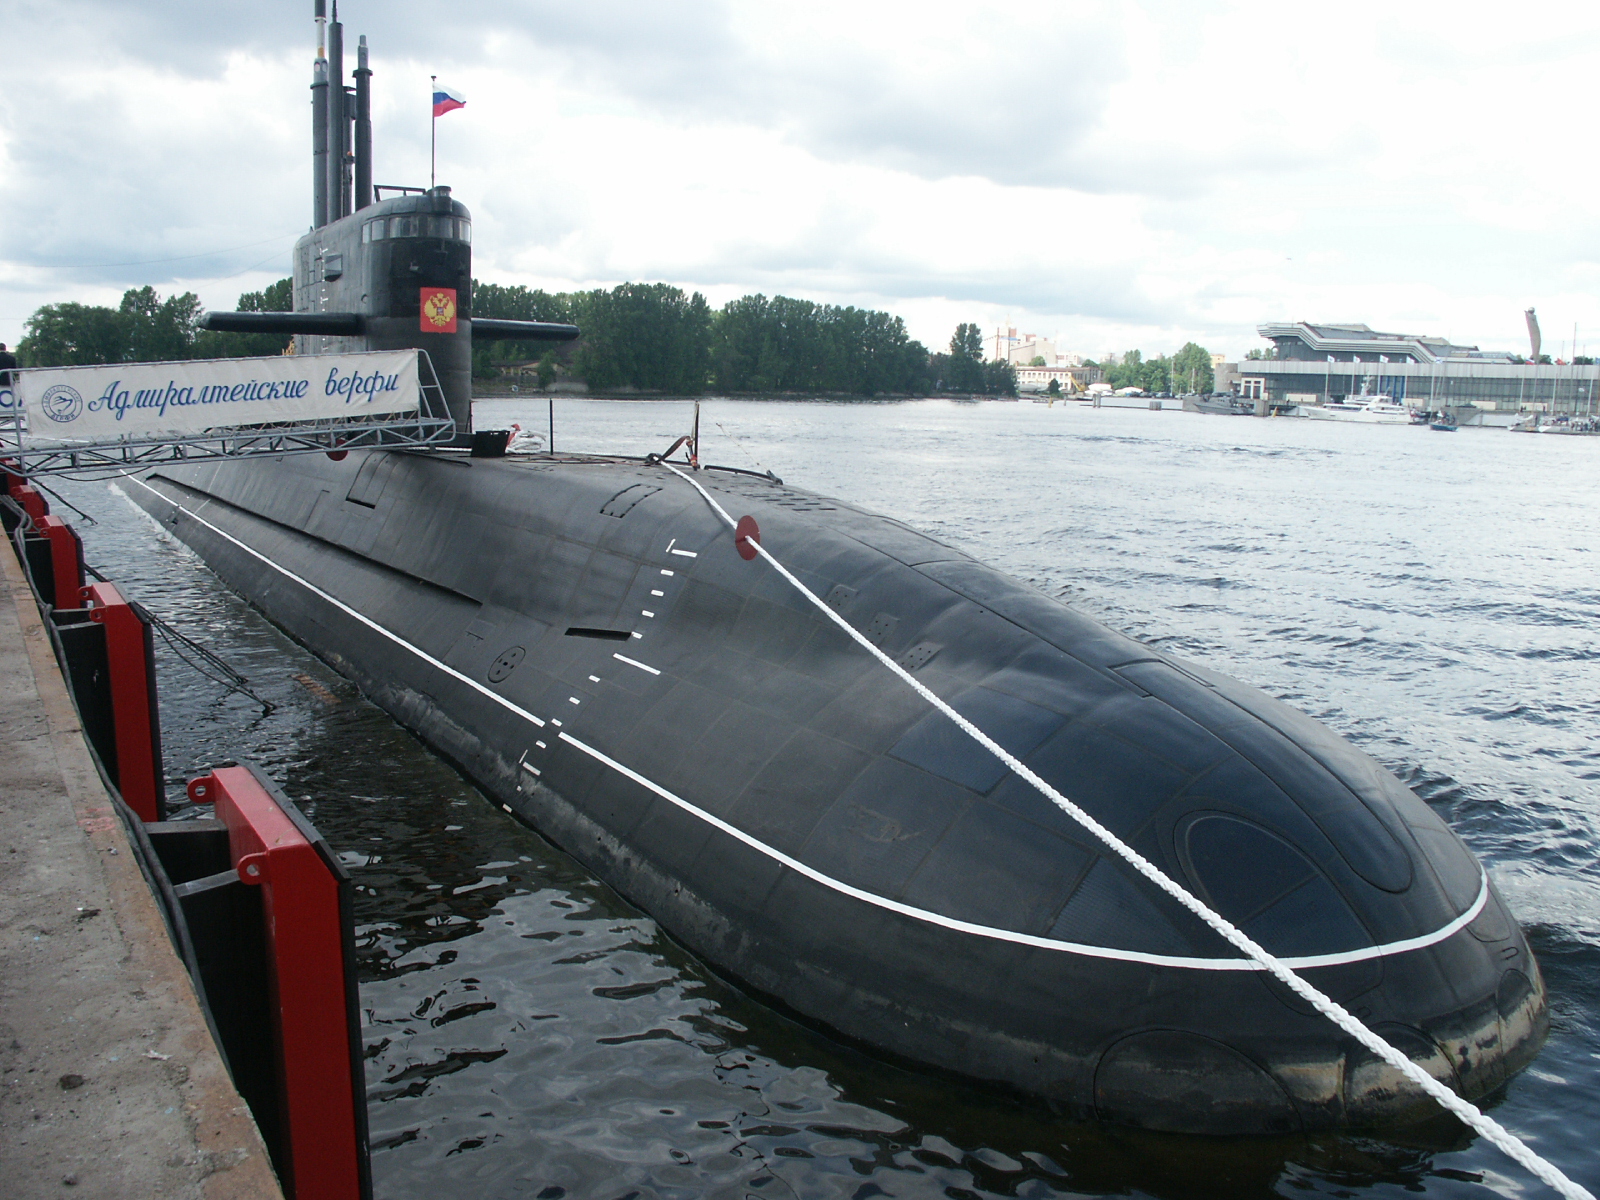 https://www.defencetalk.com/wp-content/uploads/2009/06/lada-class-submarine-russia.jpg